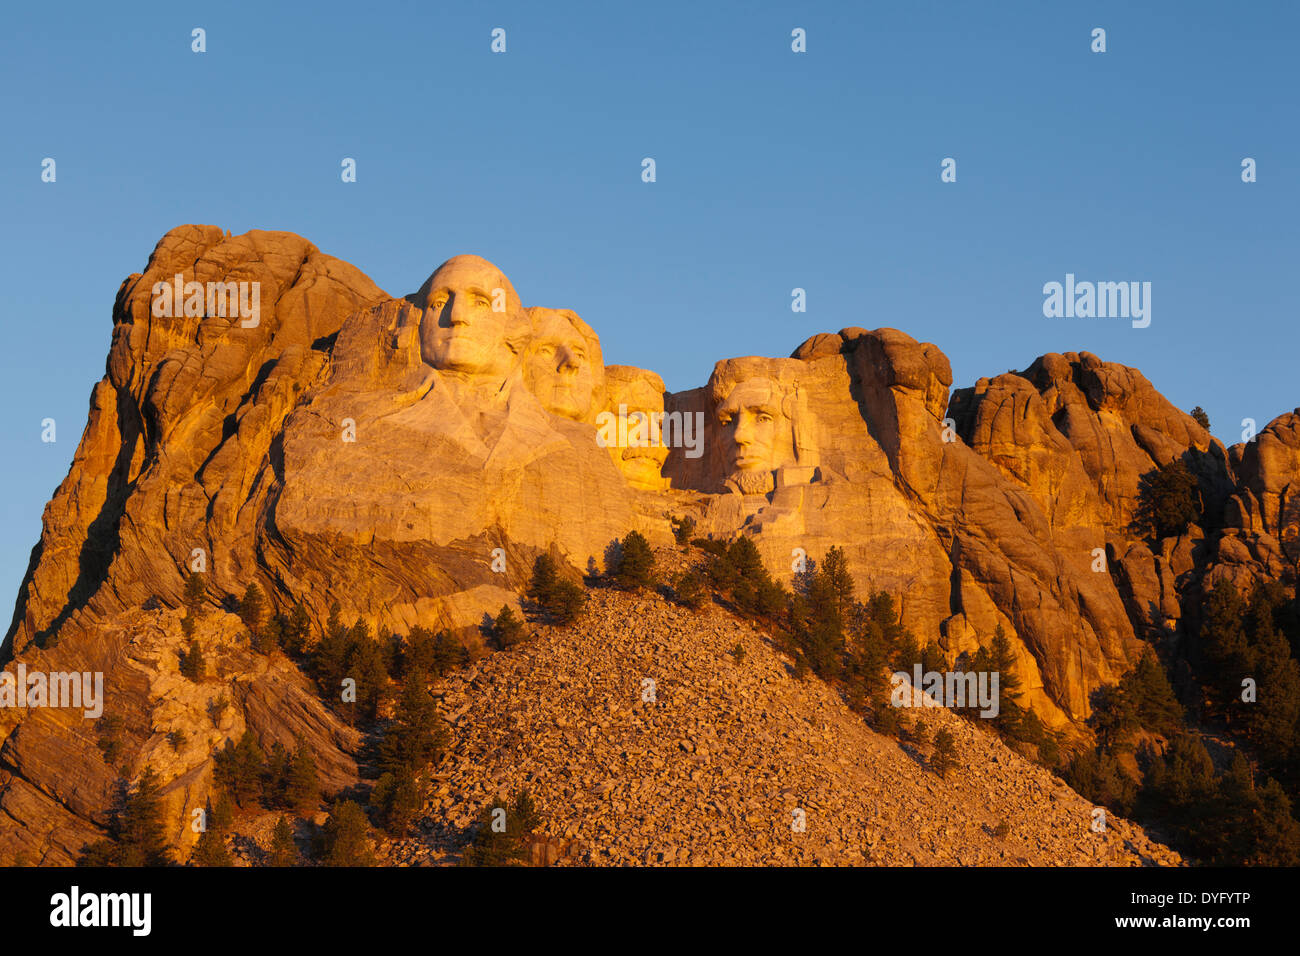 USA, South Dakota, Black Hills National Forest, Keystone, Mount Rushmore National Memorial at dawn Stock Photo